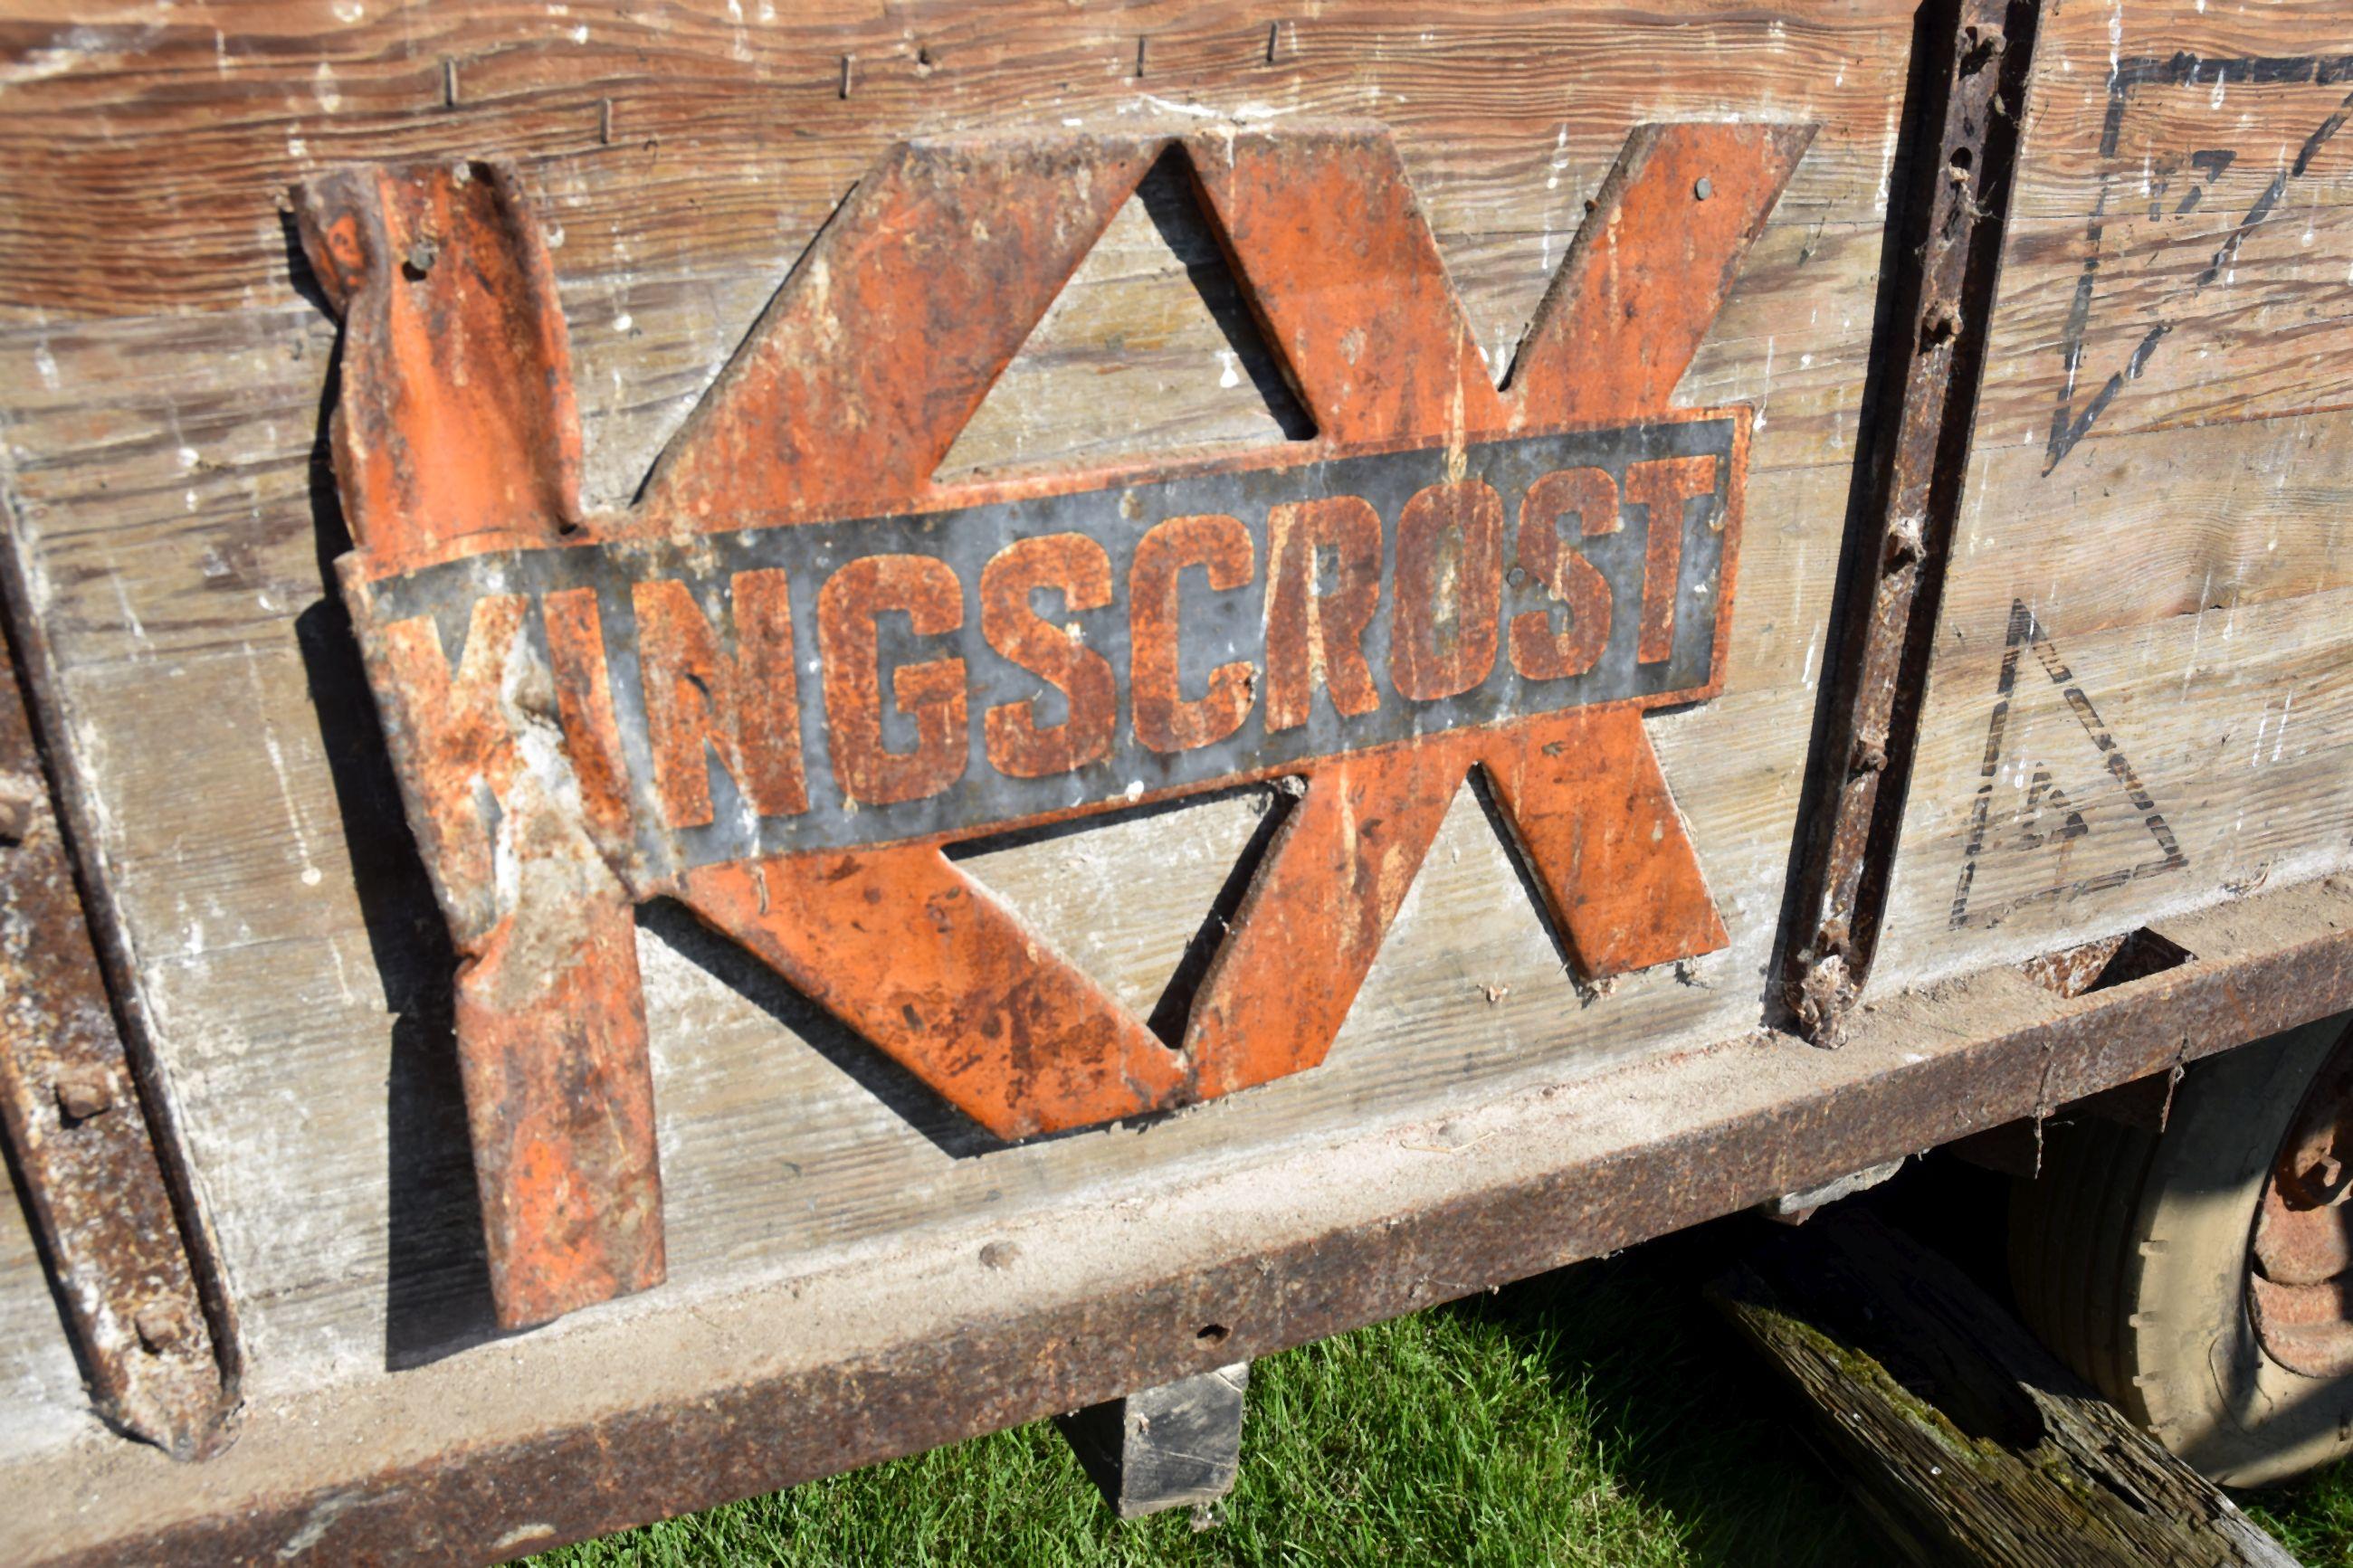 7'x14' Kingscrost Flatbed Wagon On Running Gear